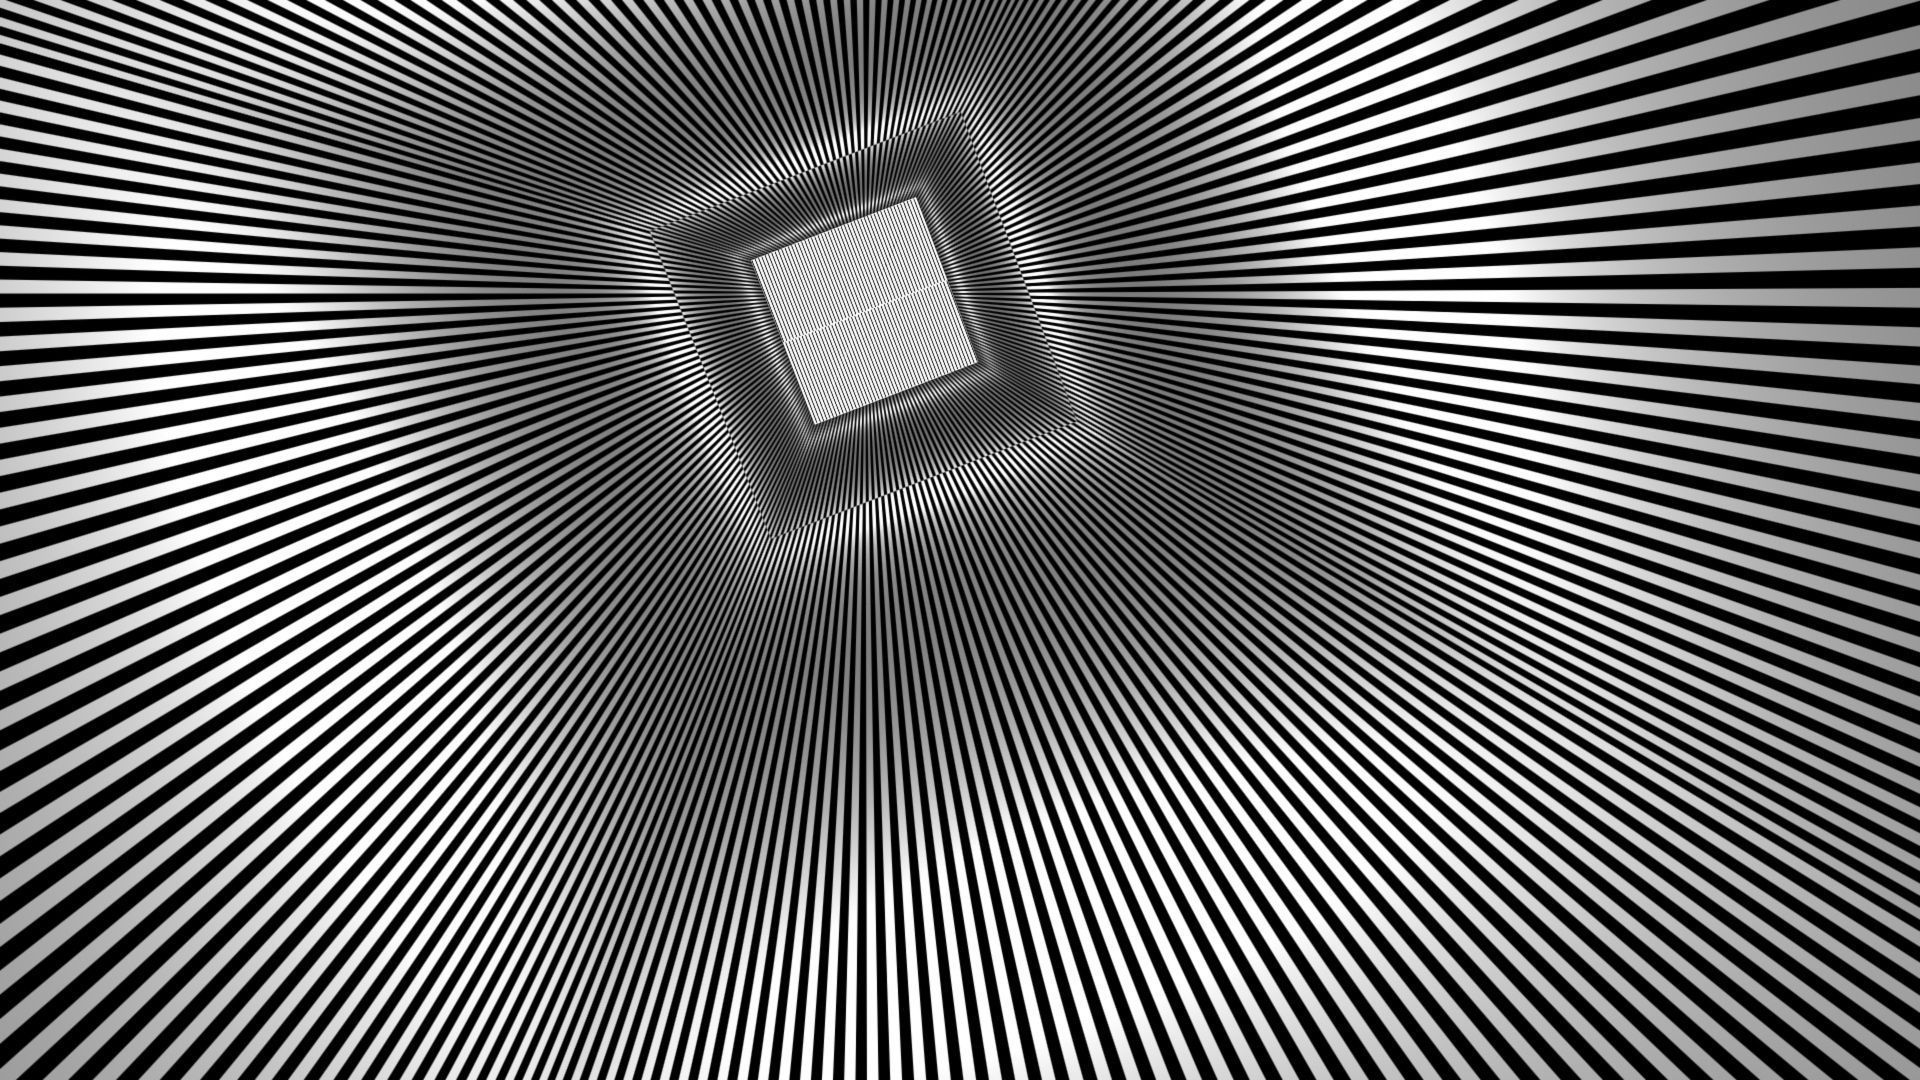 square-optical-illusion-wallpaper-44003-45097-hd-wallpapers.jpg